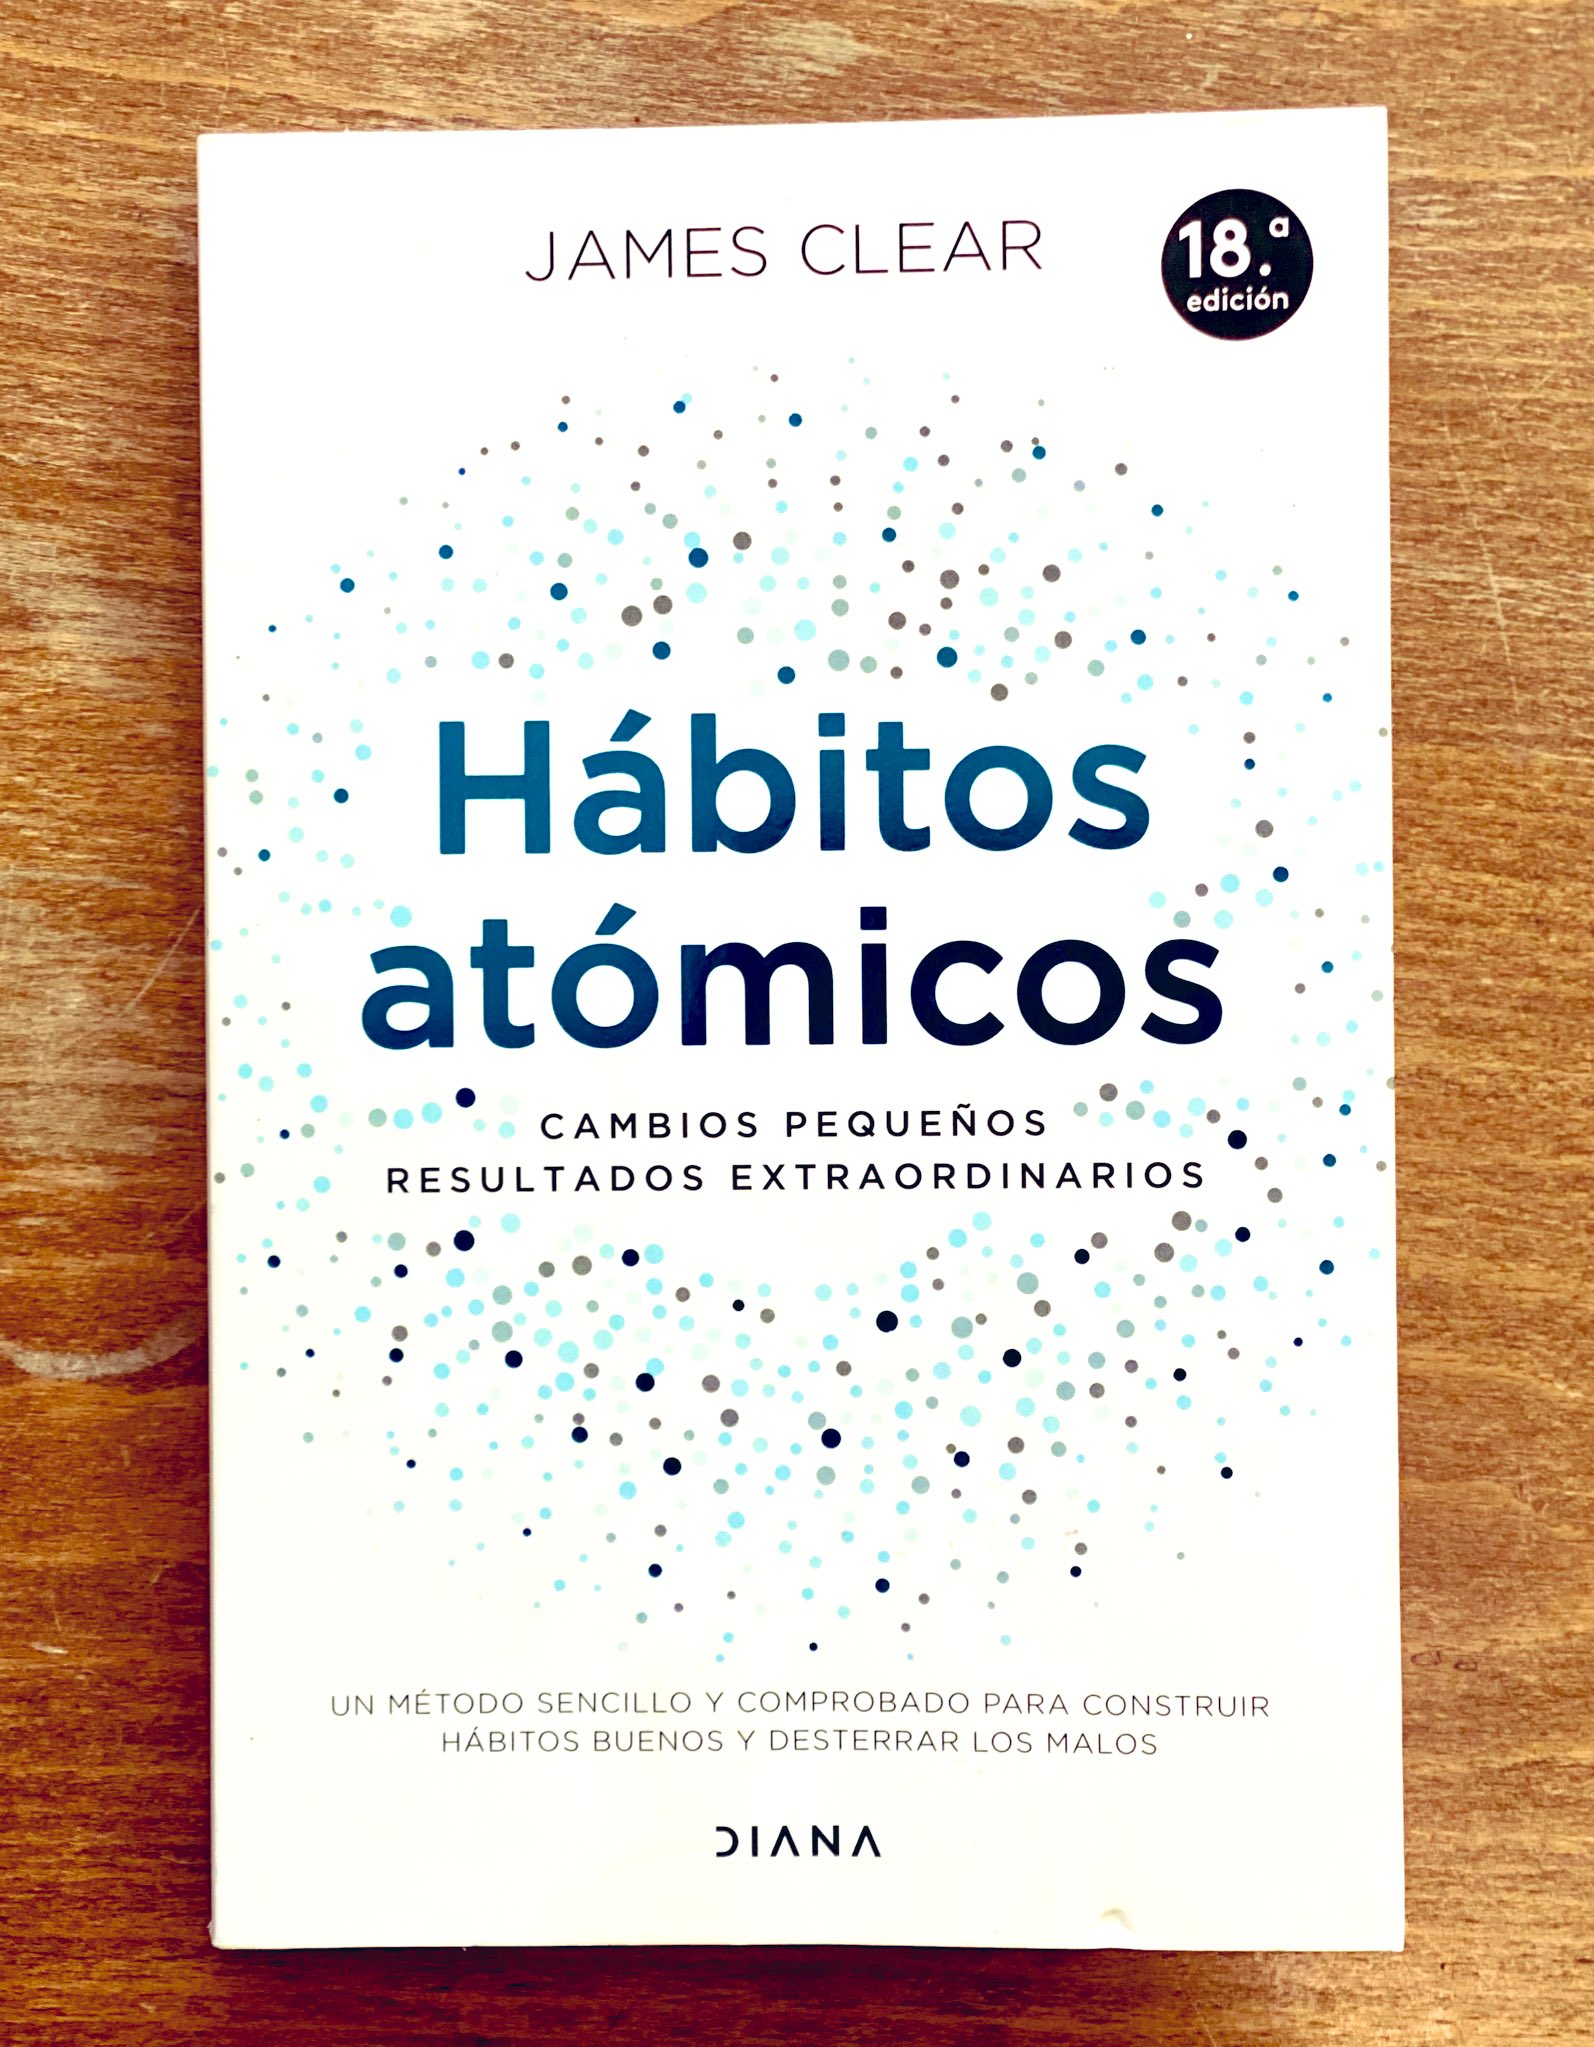 Jorge Chibás on X: 10 ✨ poderosas reflexiones del libro: Hábitos atómicos.   / X